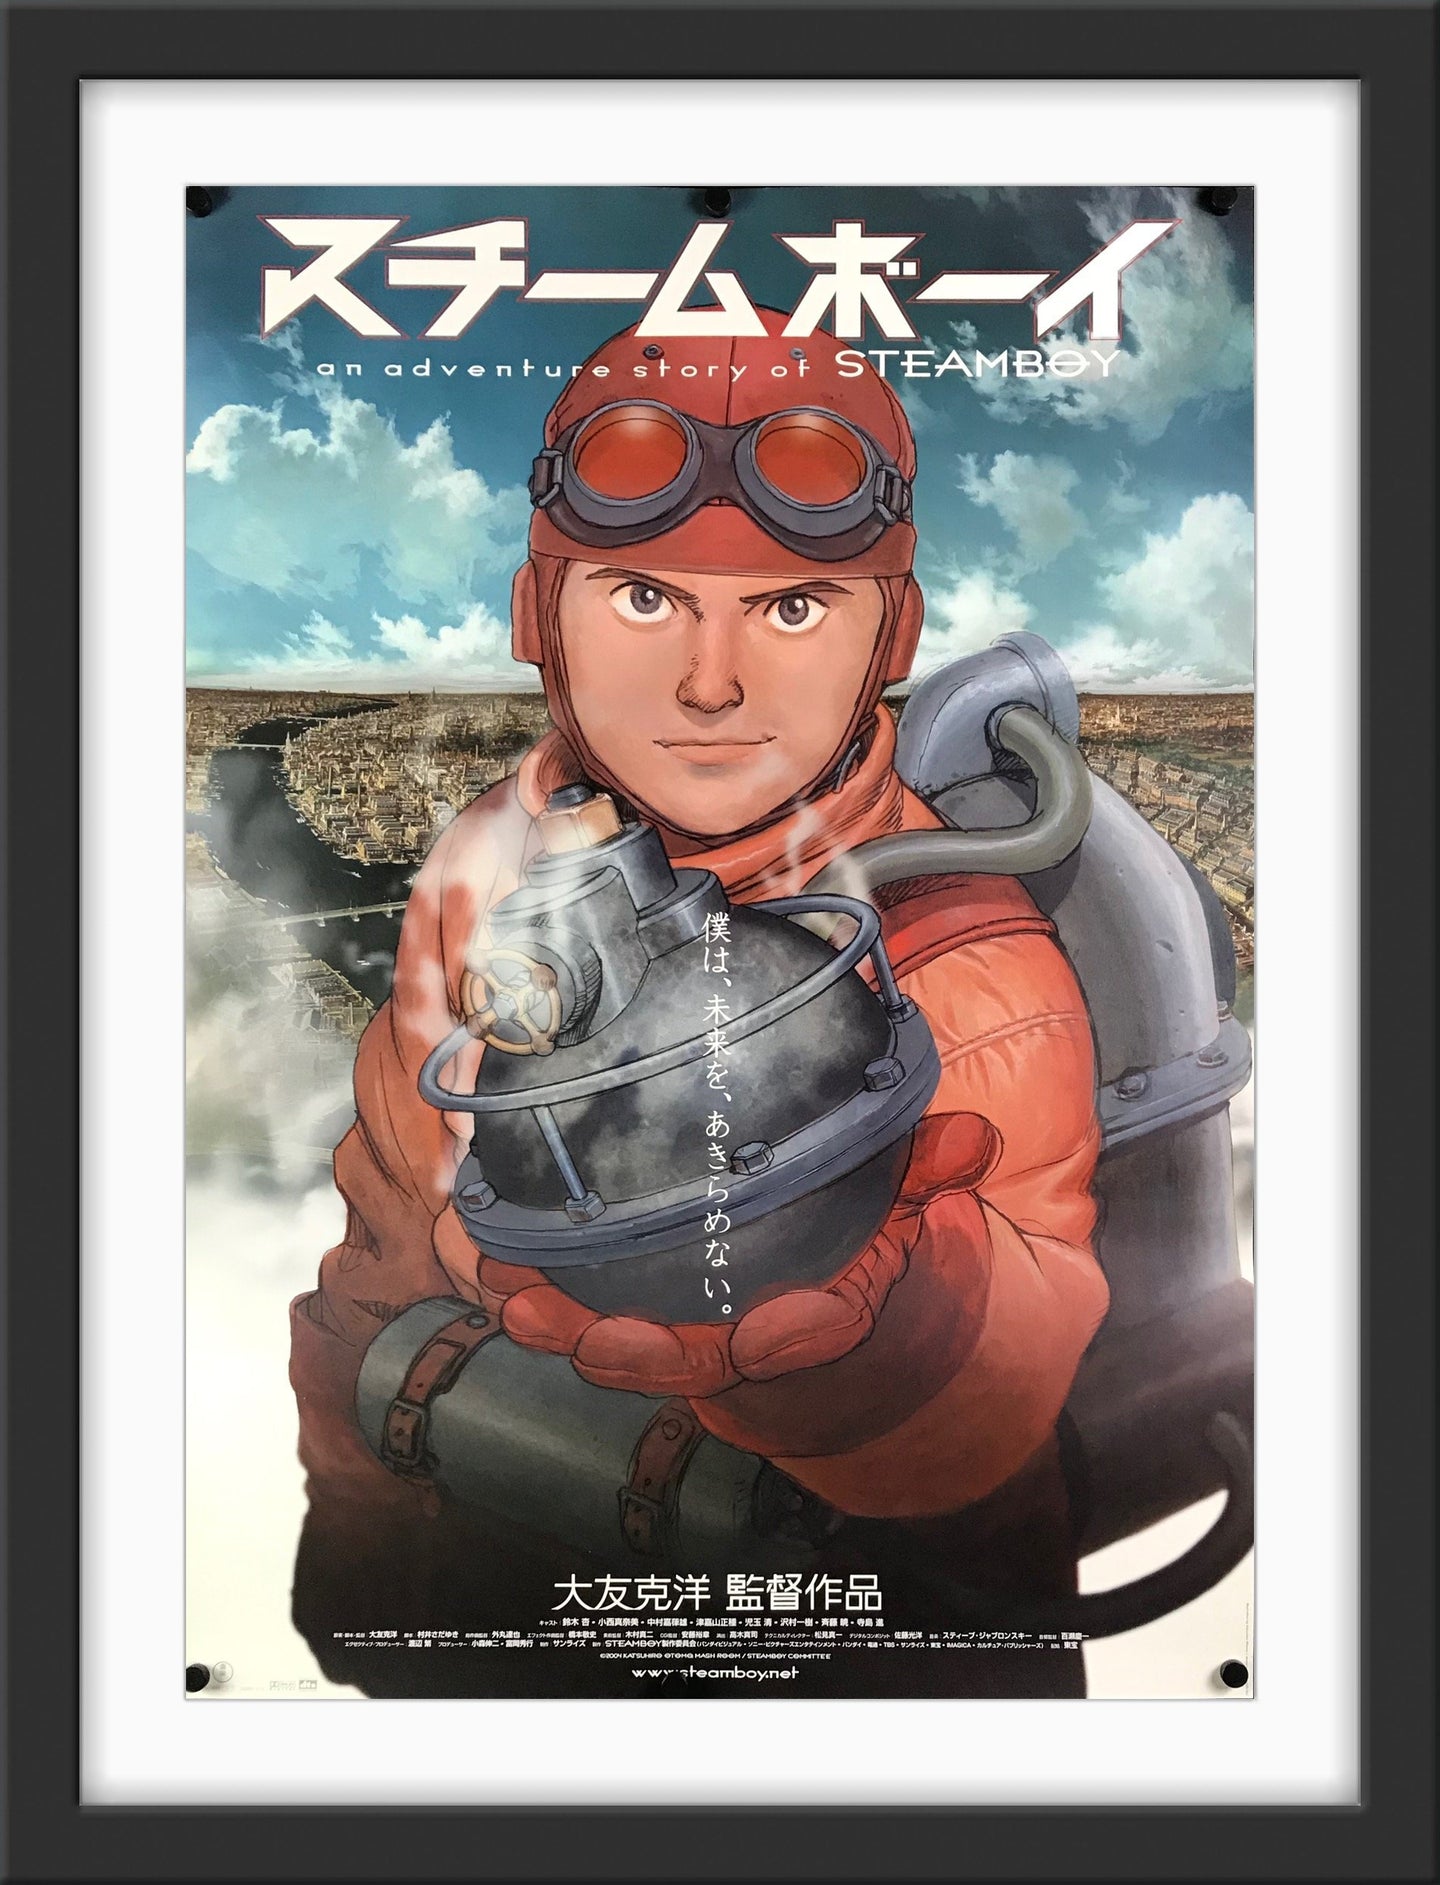 An original Japanese movie poster for the steam punk film Steamboy